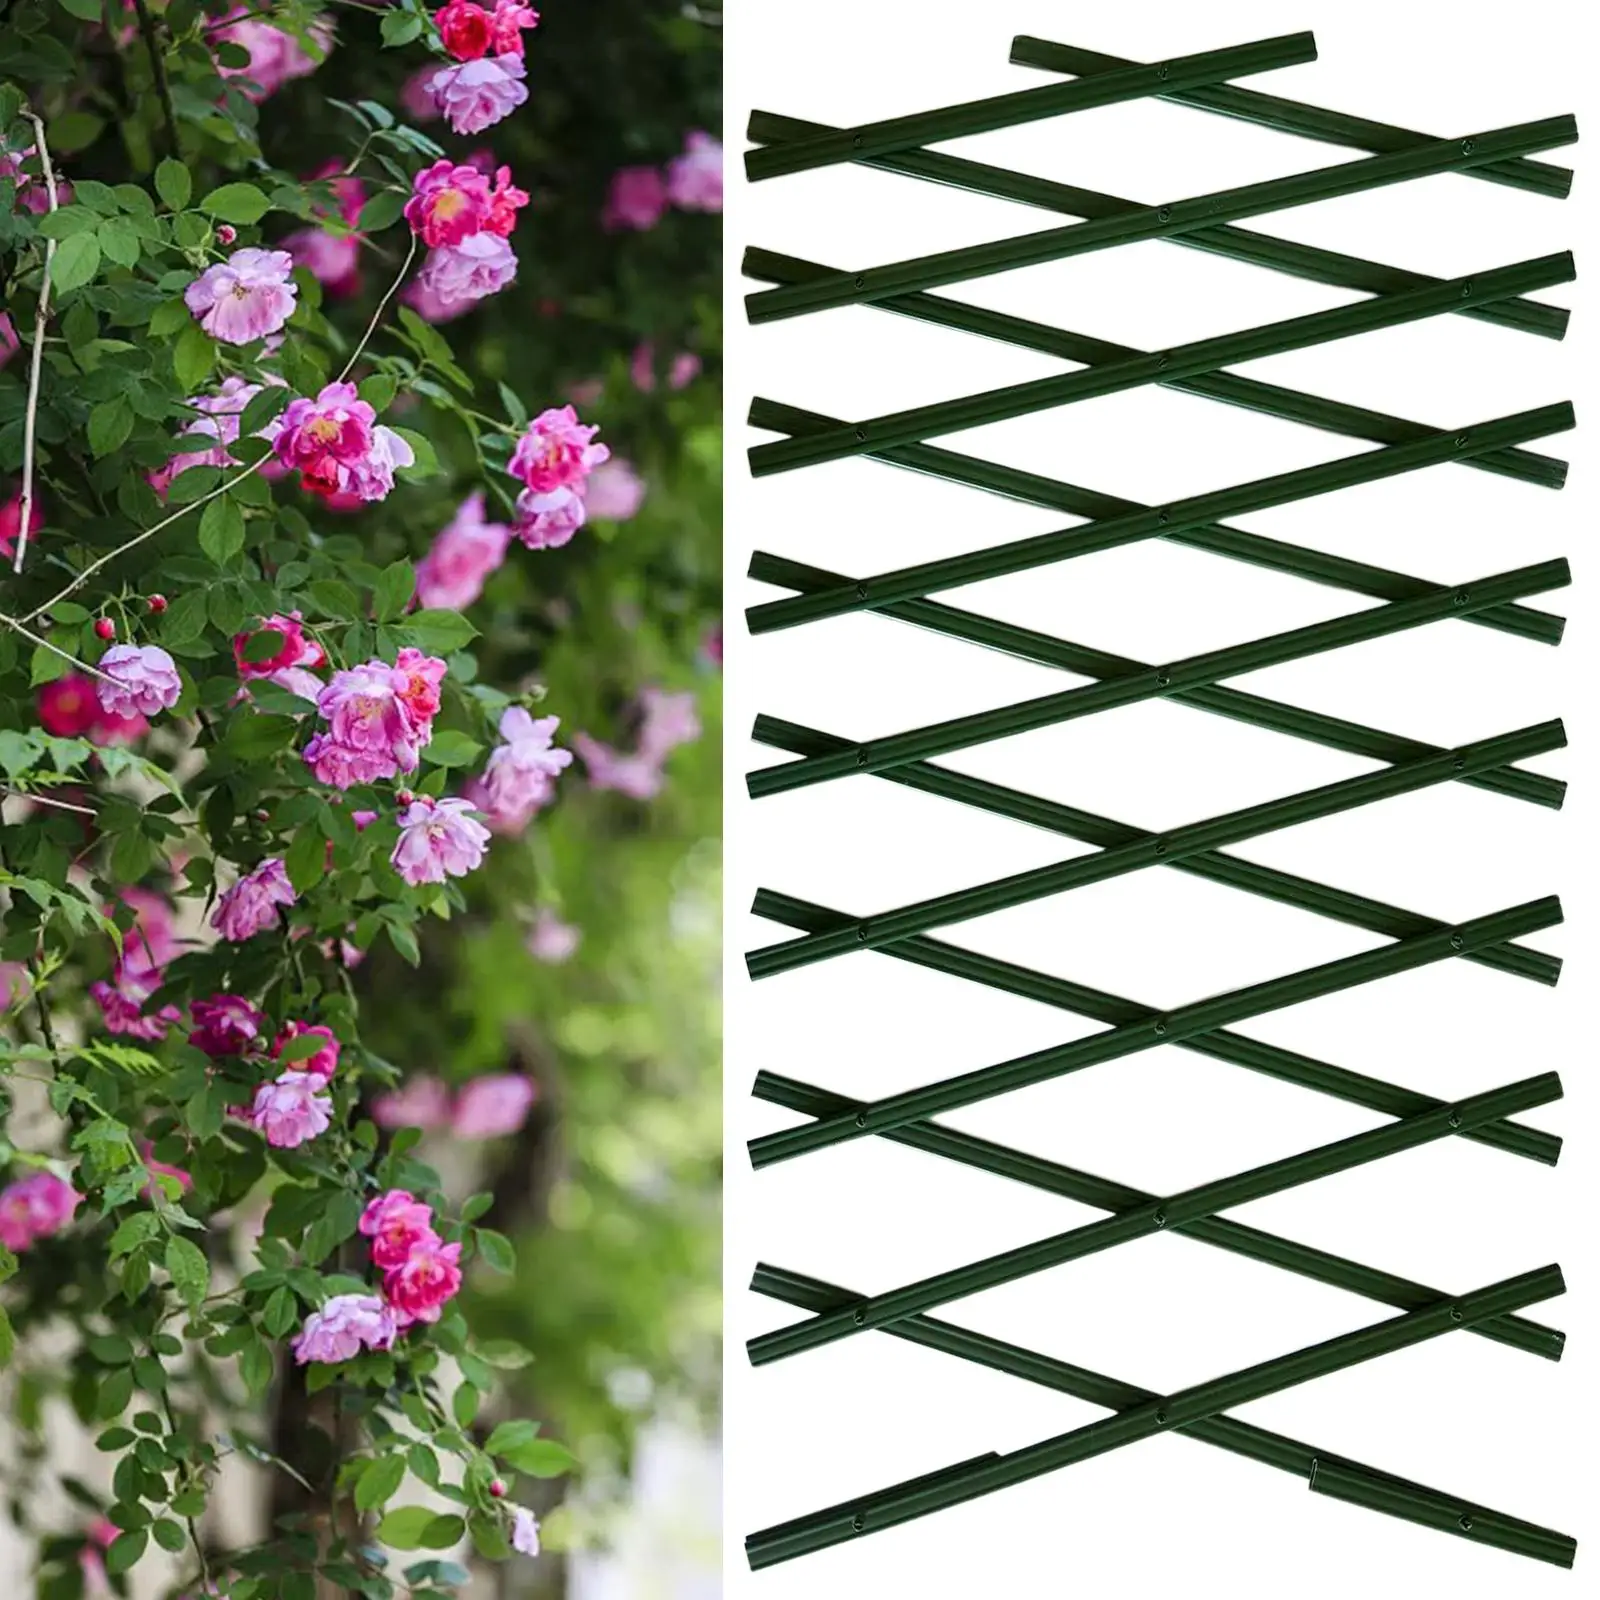 Plastic Garden Fence Retractable Climbing Plants Wall Trellis for Courtyard Lawn Decor